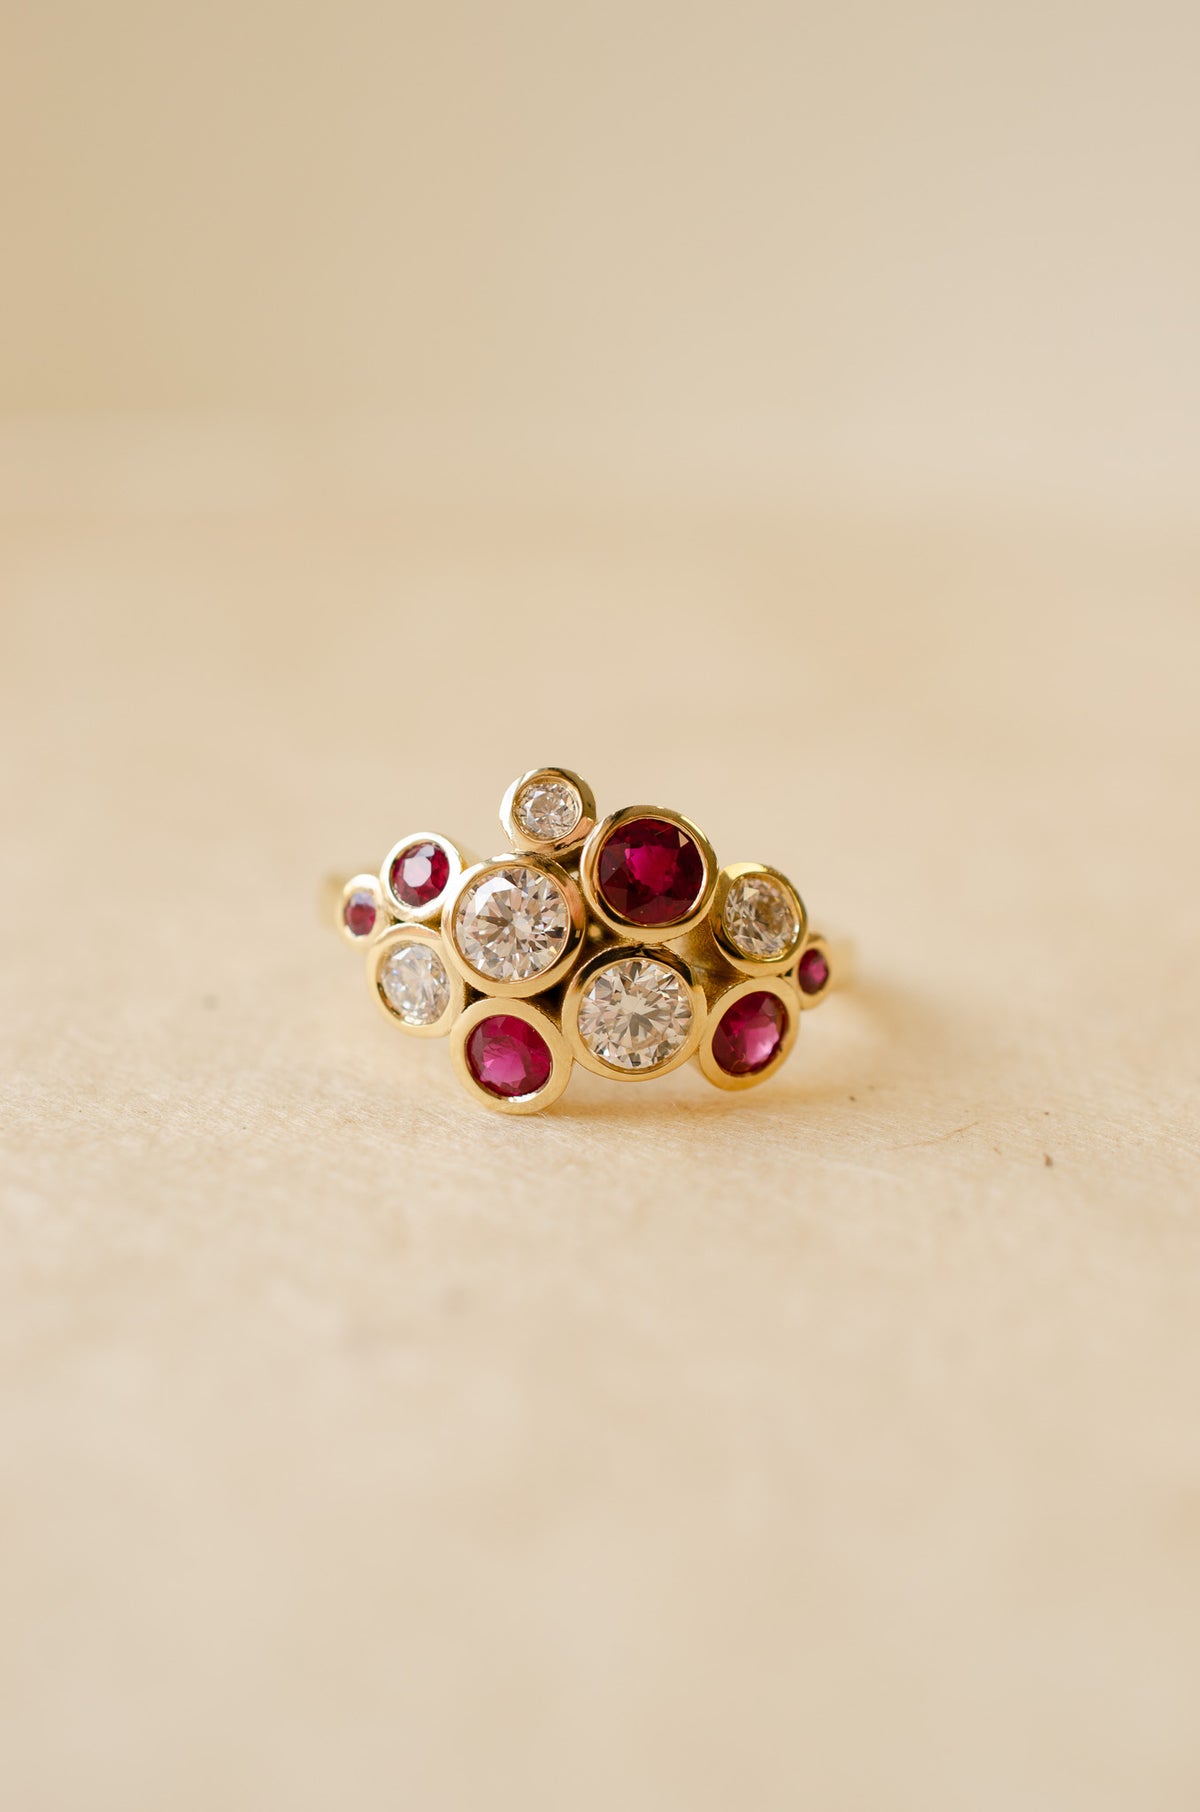 Diamond Engagement Rings & Wedding Rings | Element ...